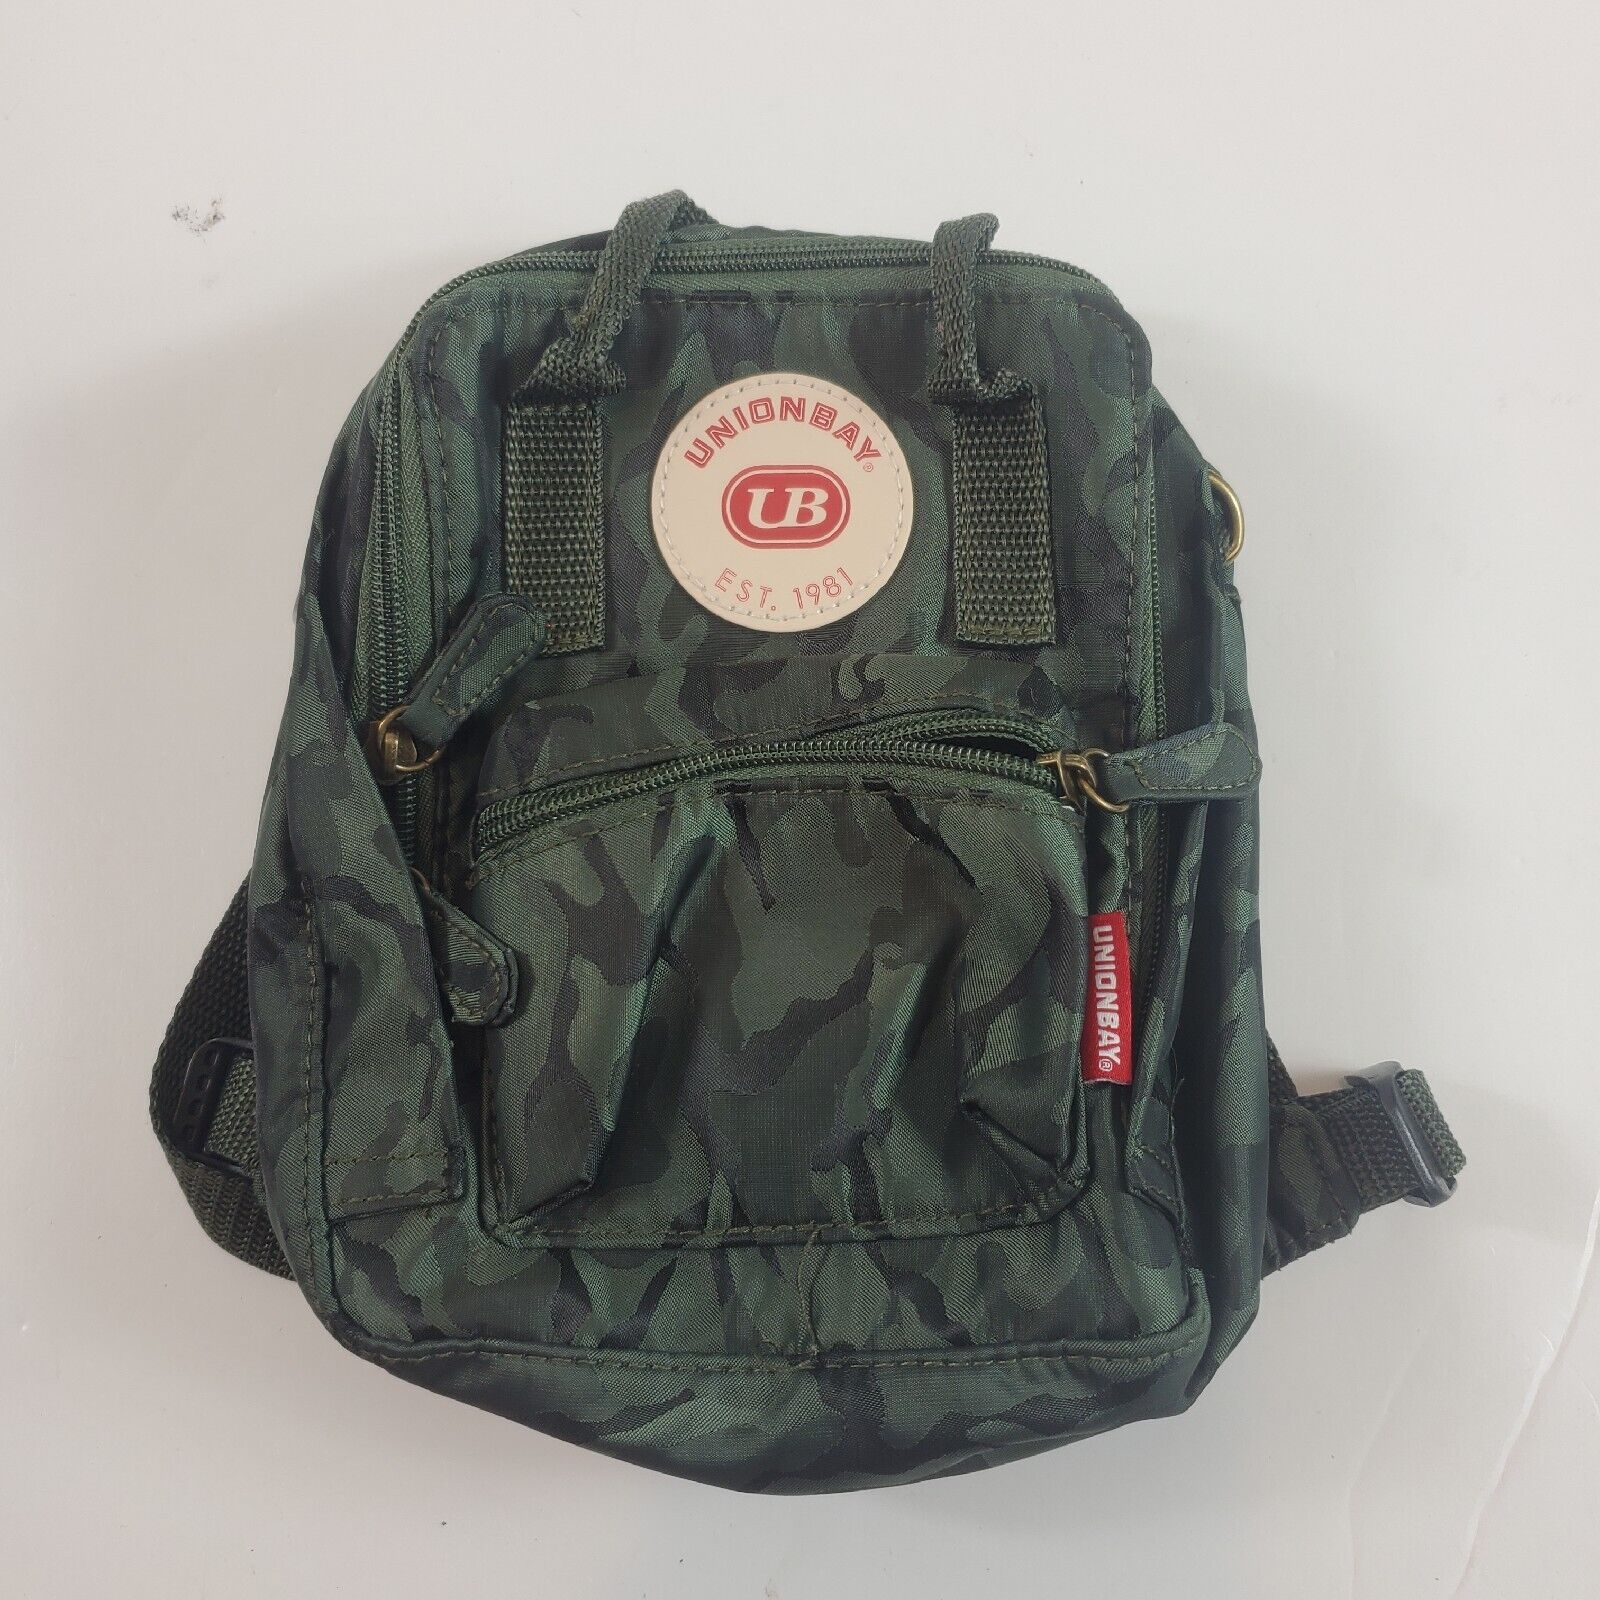 unionbay purse backpack green camo mini flaw - image 1